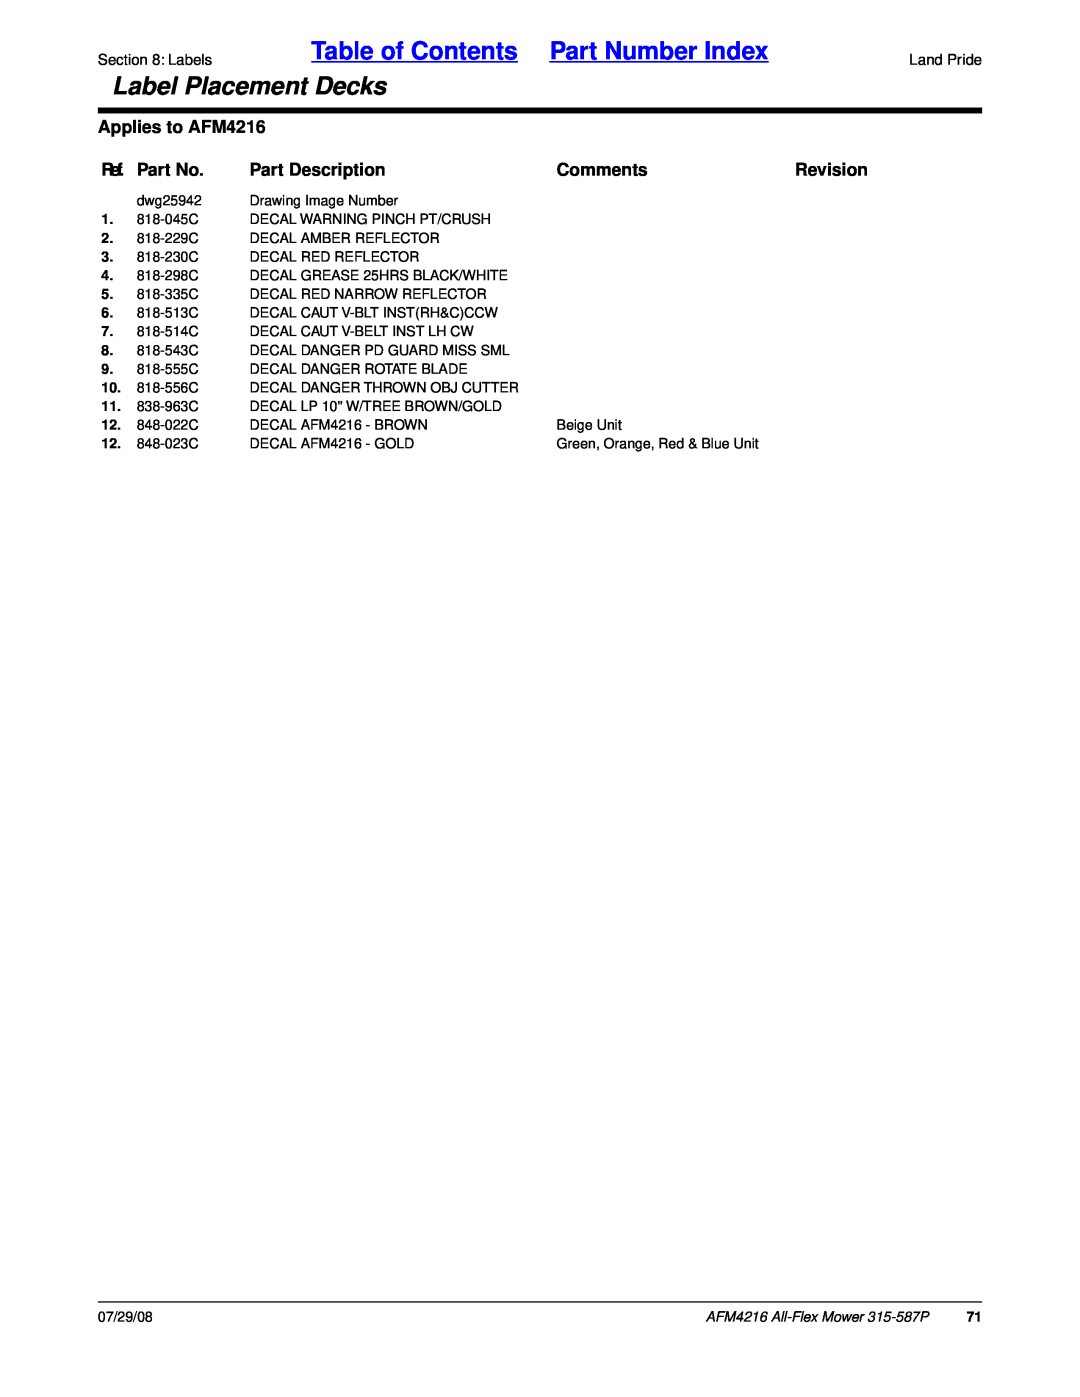 Land Pride manual Table of Contents Part Number Index, Label Placement Decks, Applies to AFM4216, Ref. Part No, Comments 